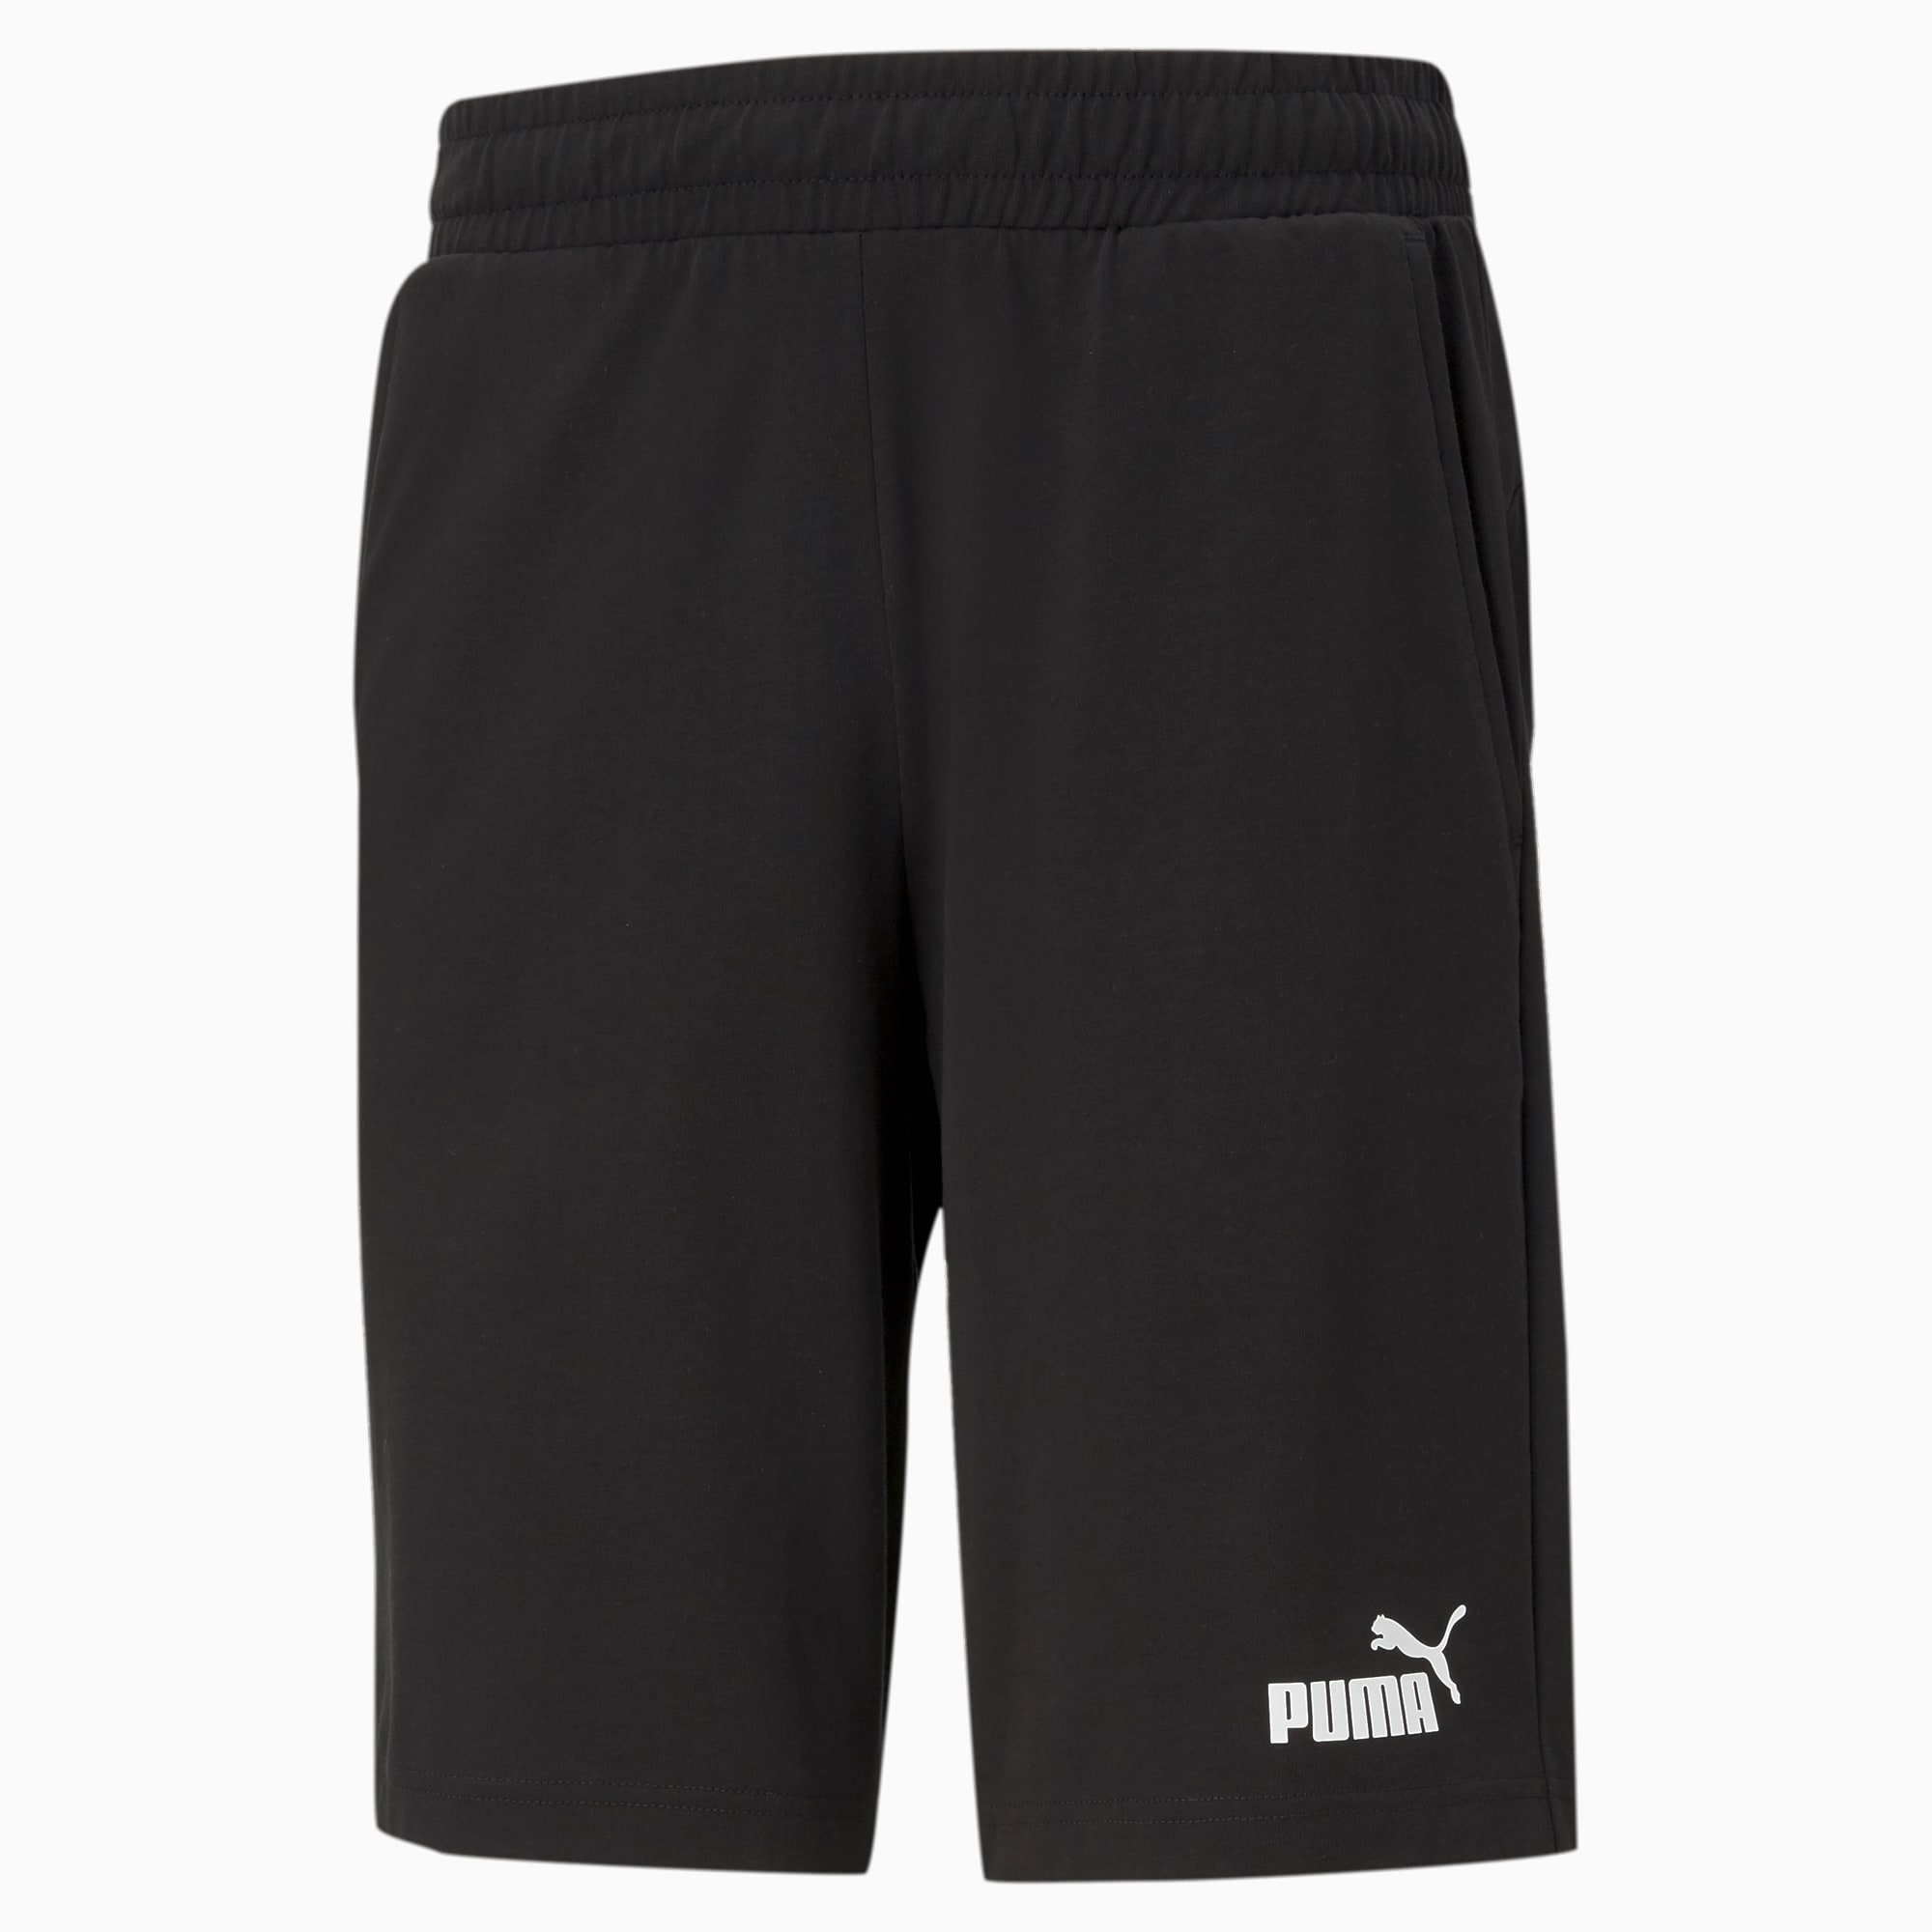 PUMA Essentials Jersey Men's Shorts, Black, Size XS, Clothing